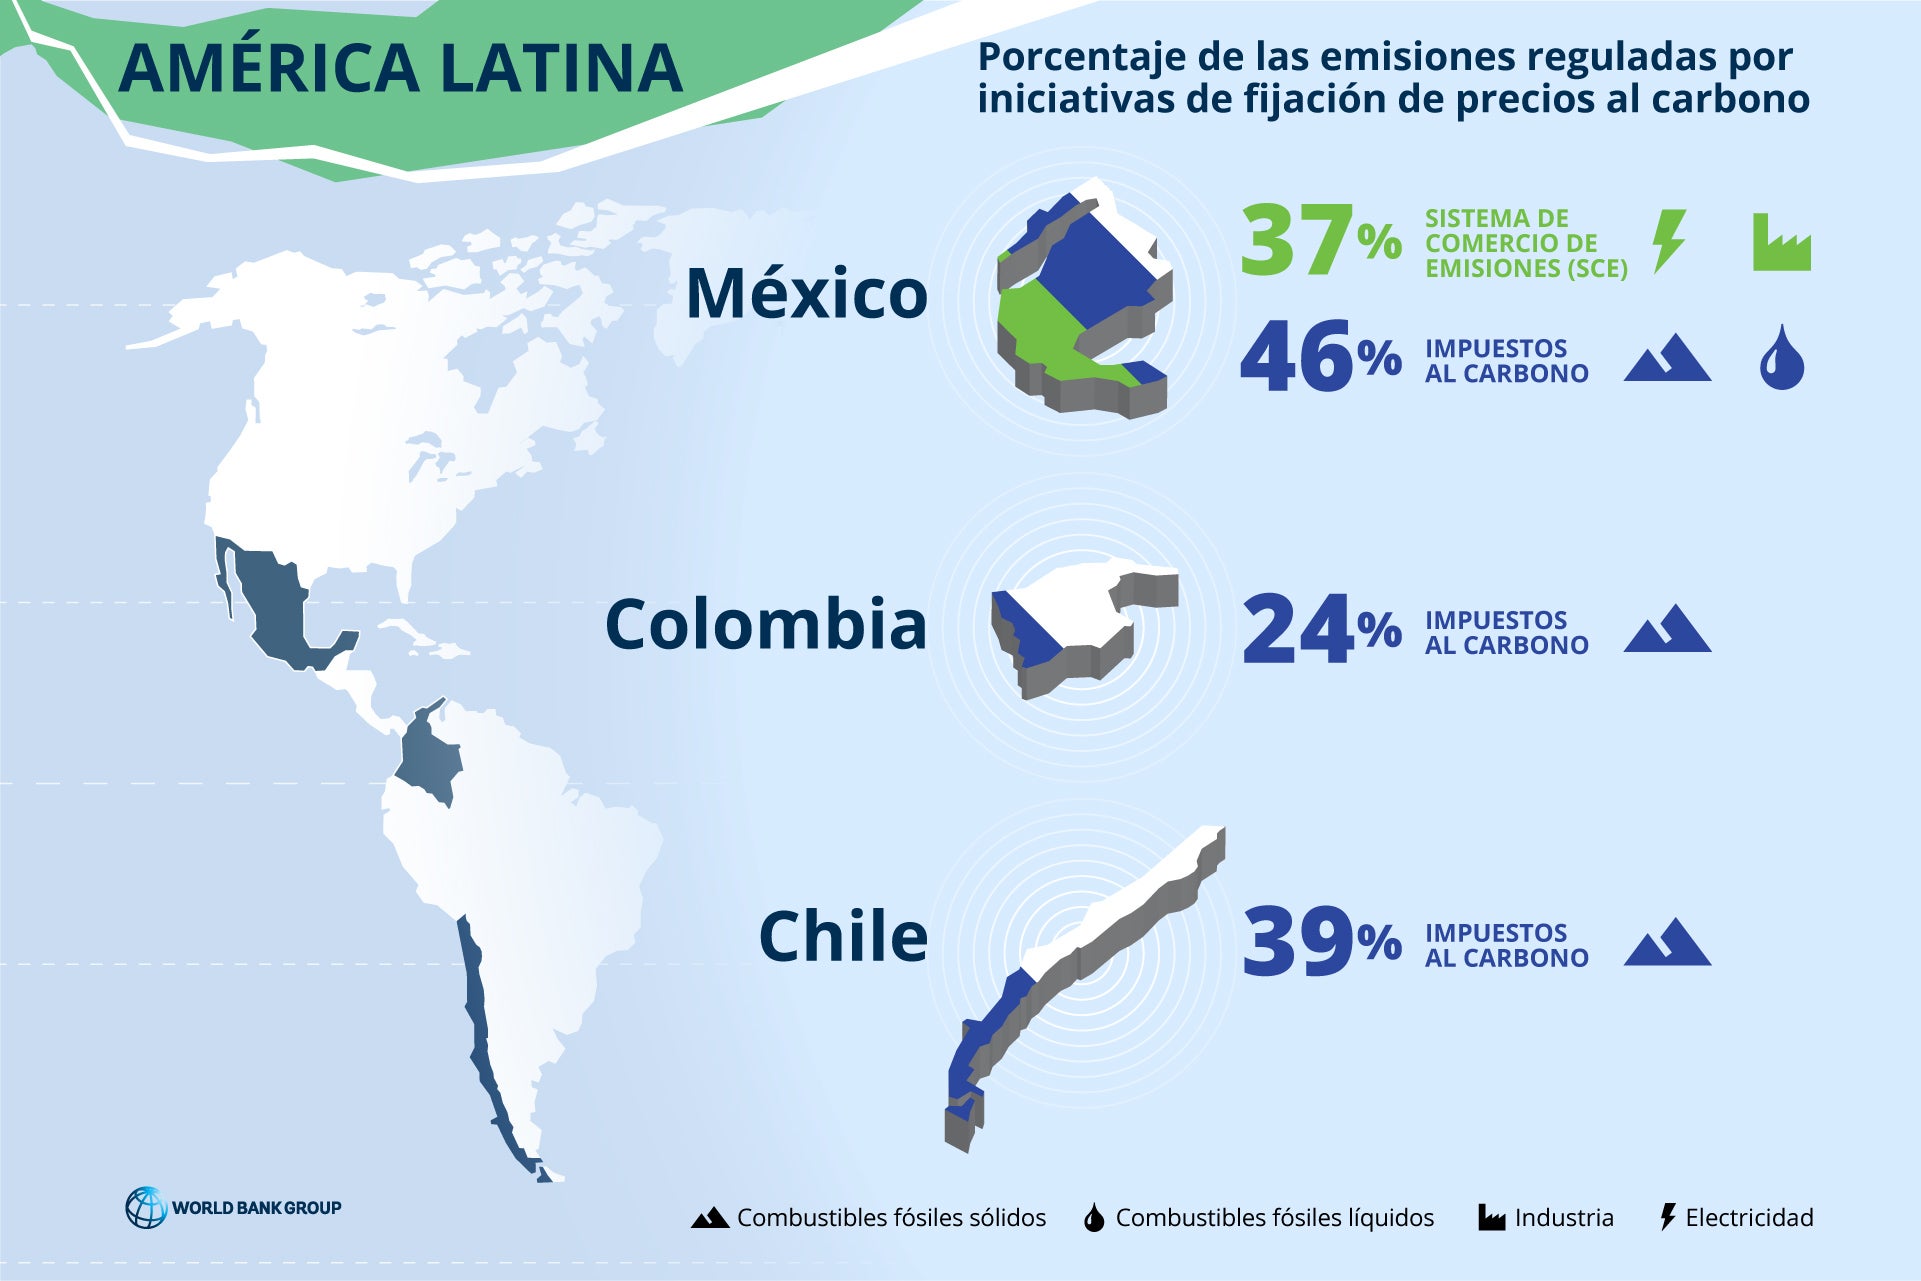 Porcentaje de emisiones reguladas en América Latina